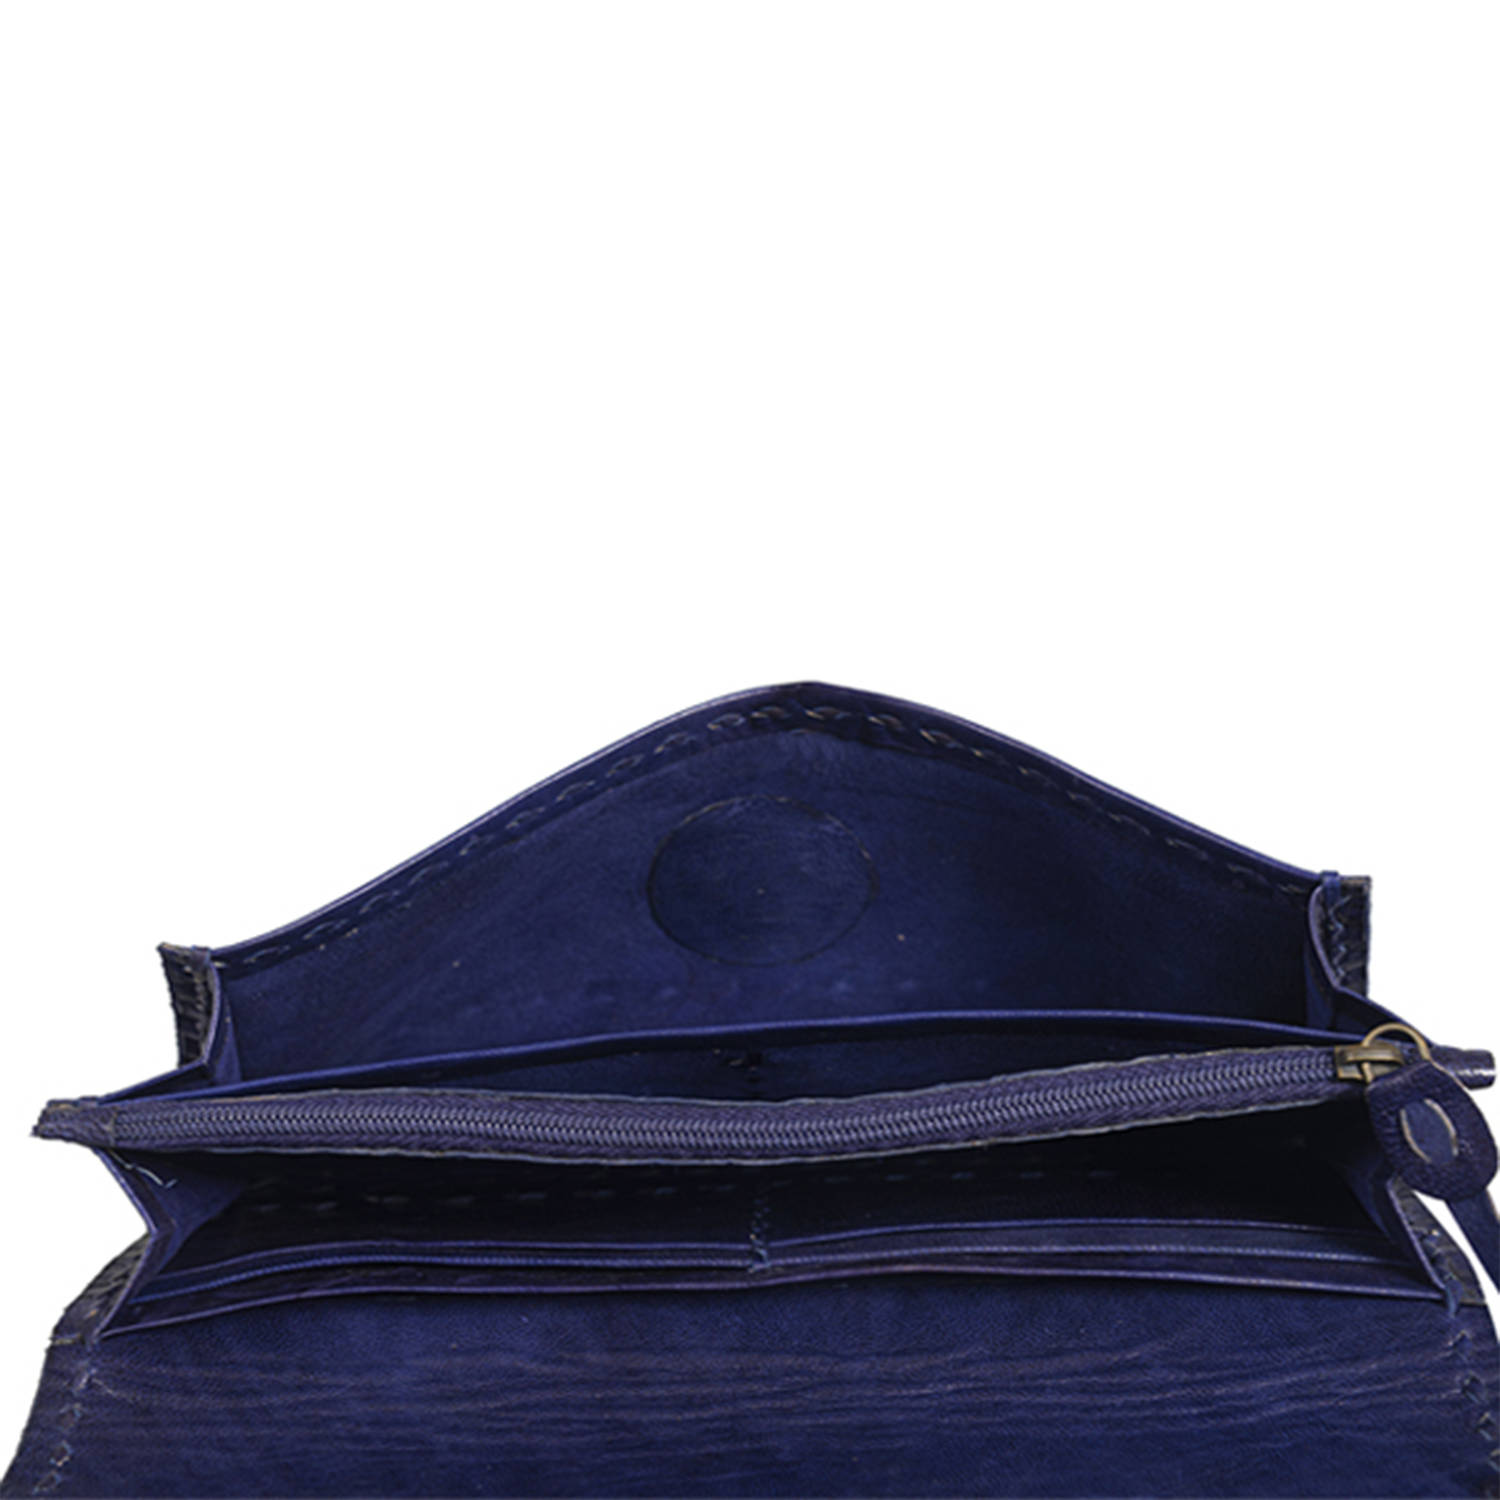 LEATHER TOTE BAG, Navy Blue Leather Handbag, Navy Blue Shoulder Leather Bag,  Navy Blue Leather Purse, Cowhide Leather Bag, Woman Leather Bag - Etsy